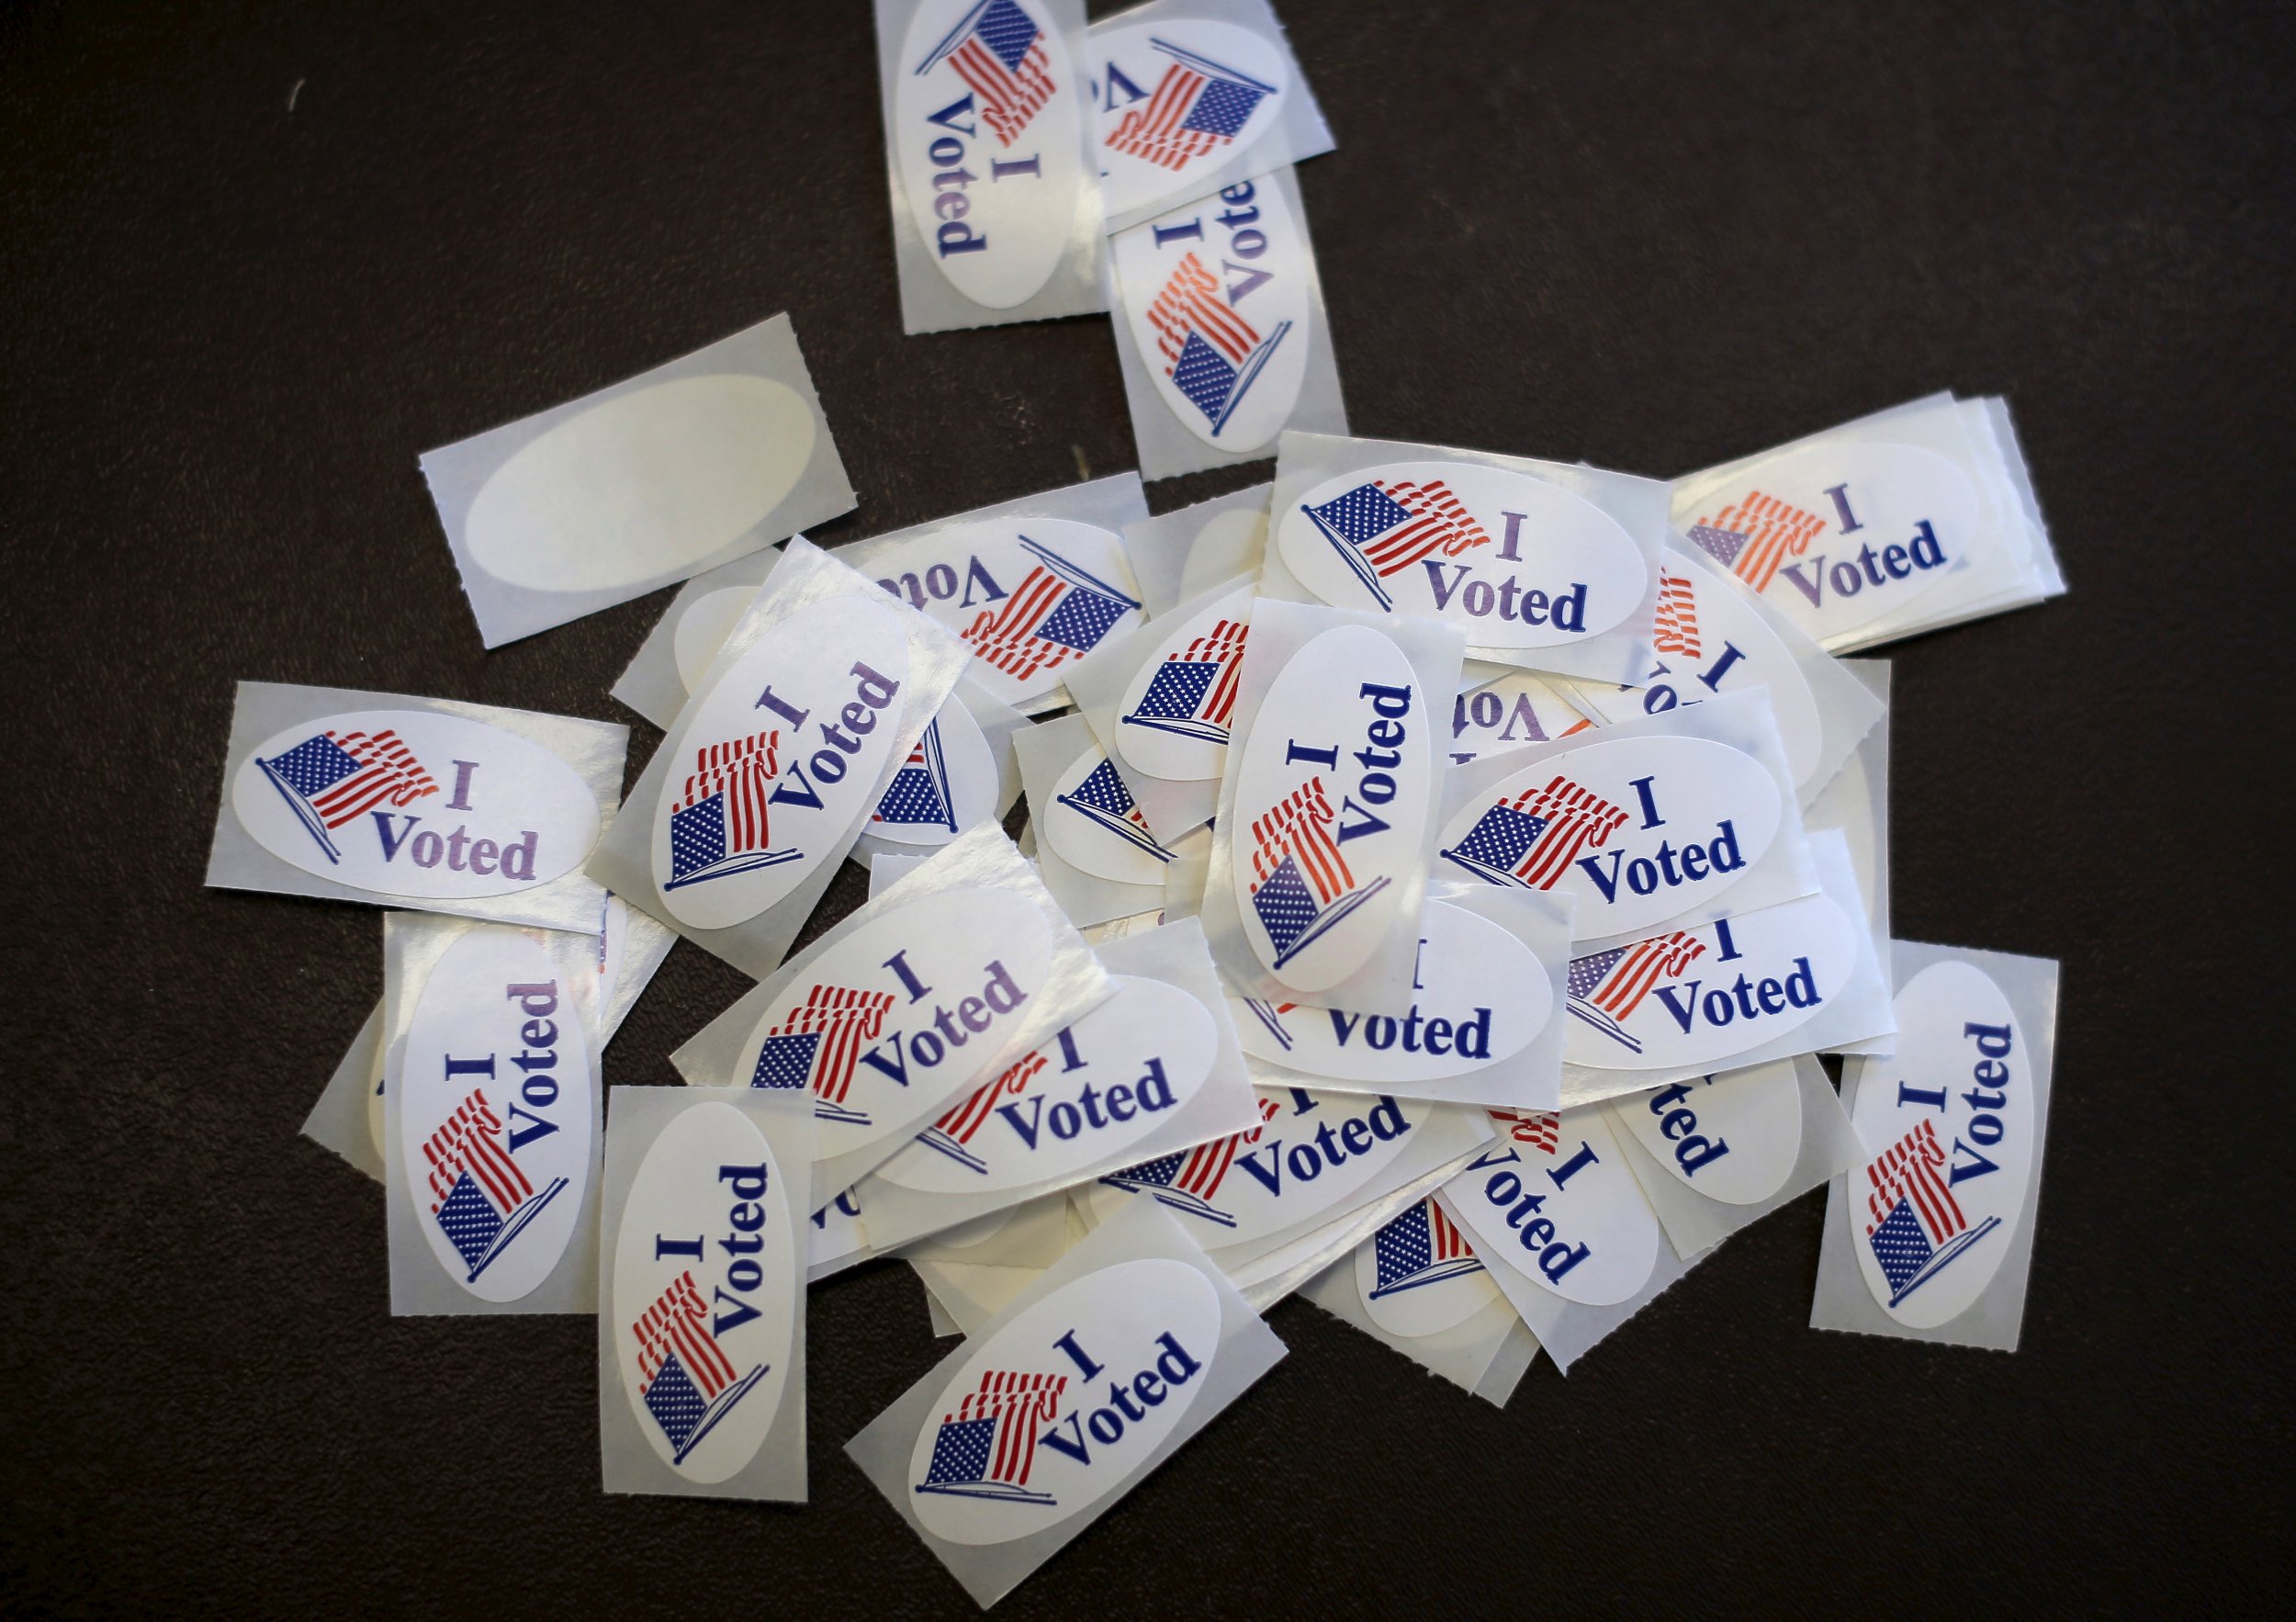 Judge Orders Virginia to Extend Voter Registration Deadline Through Friday